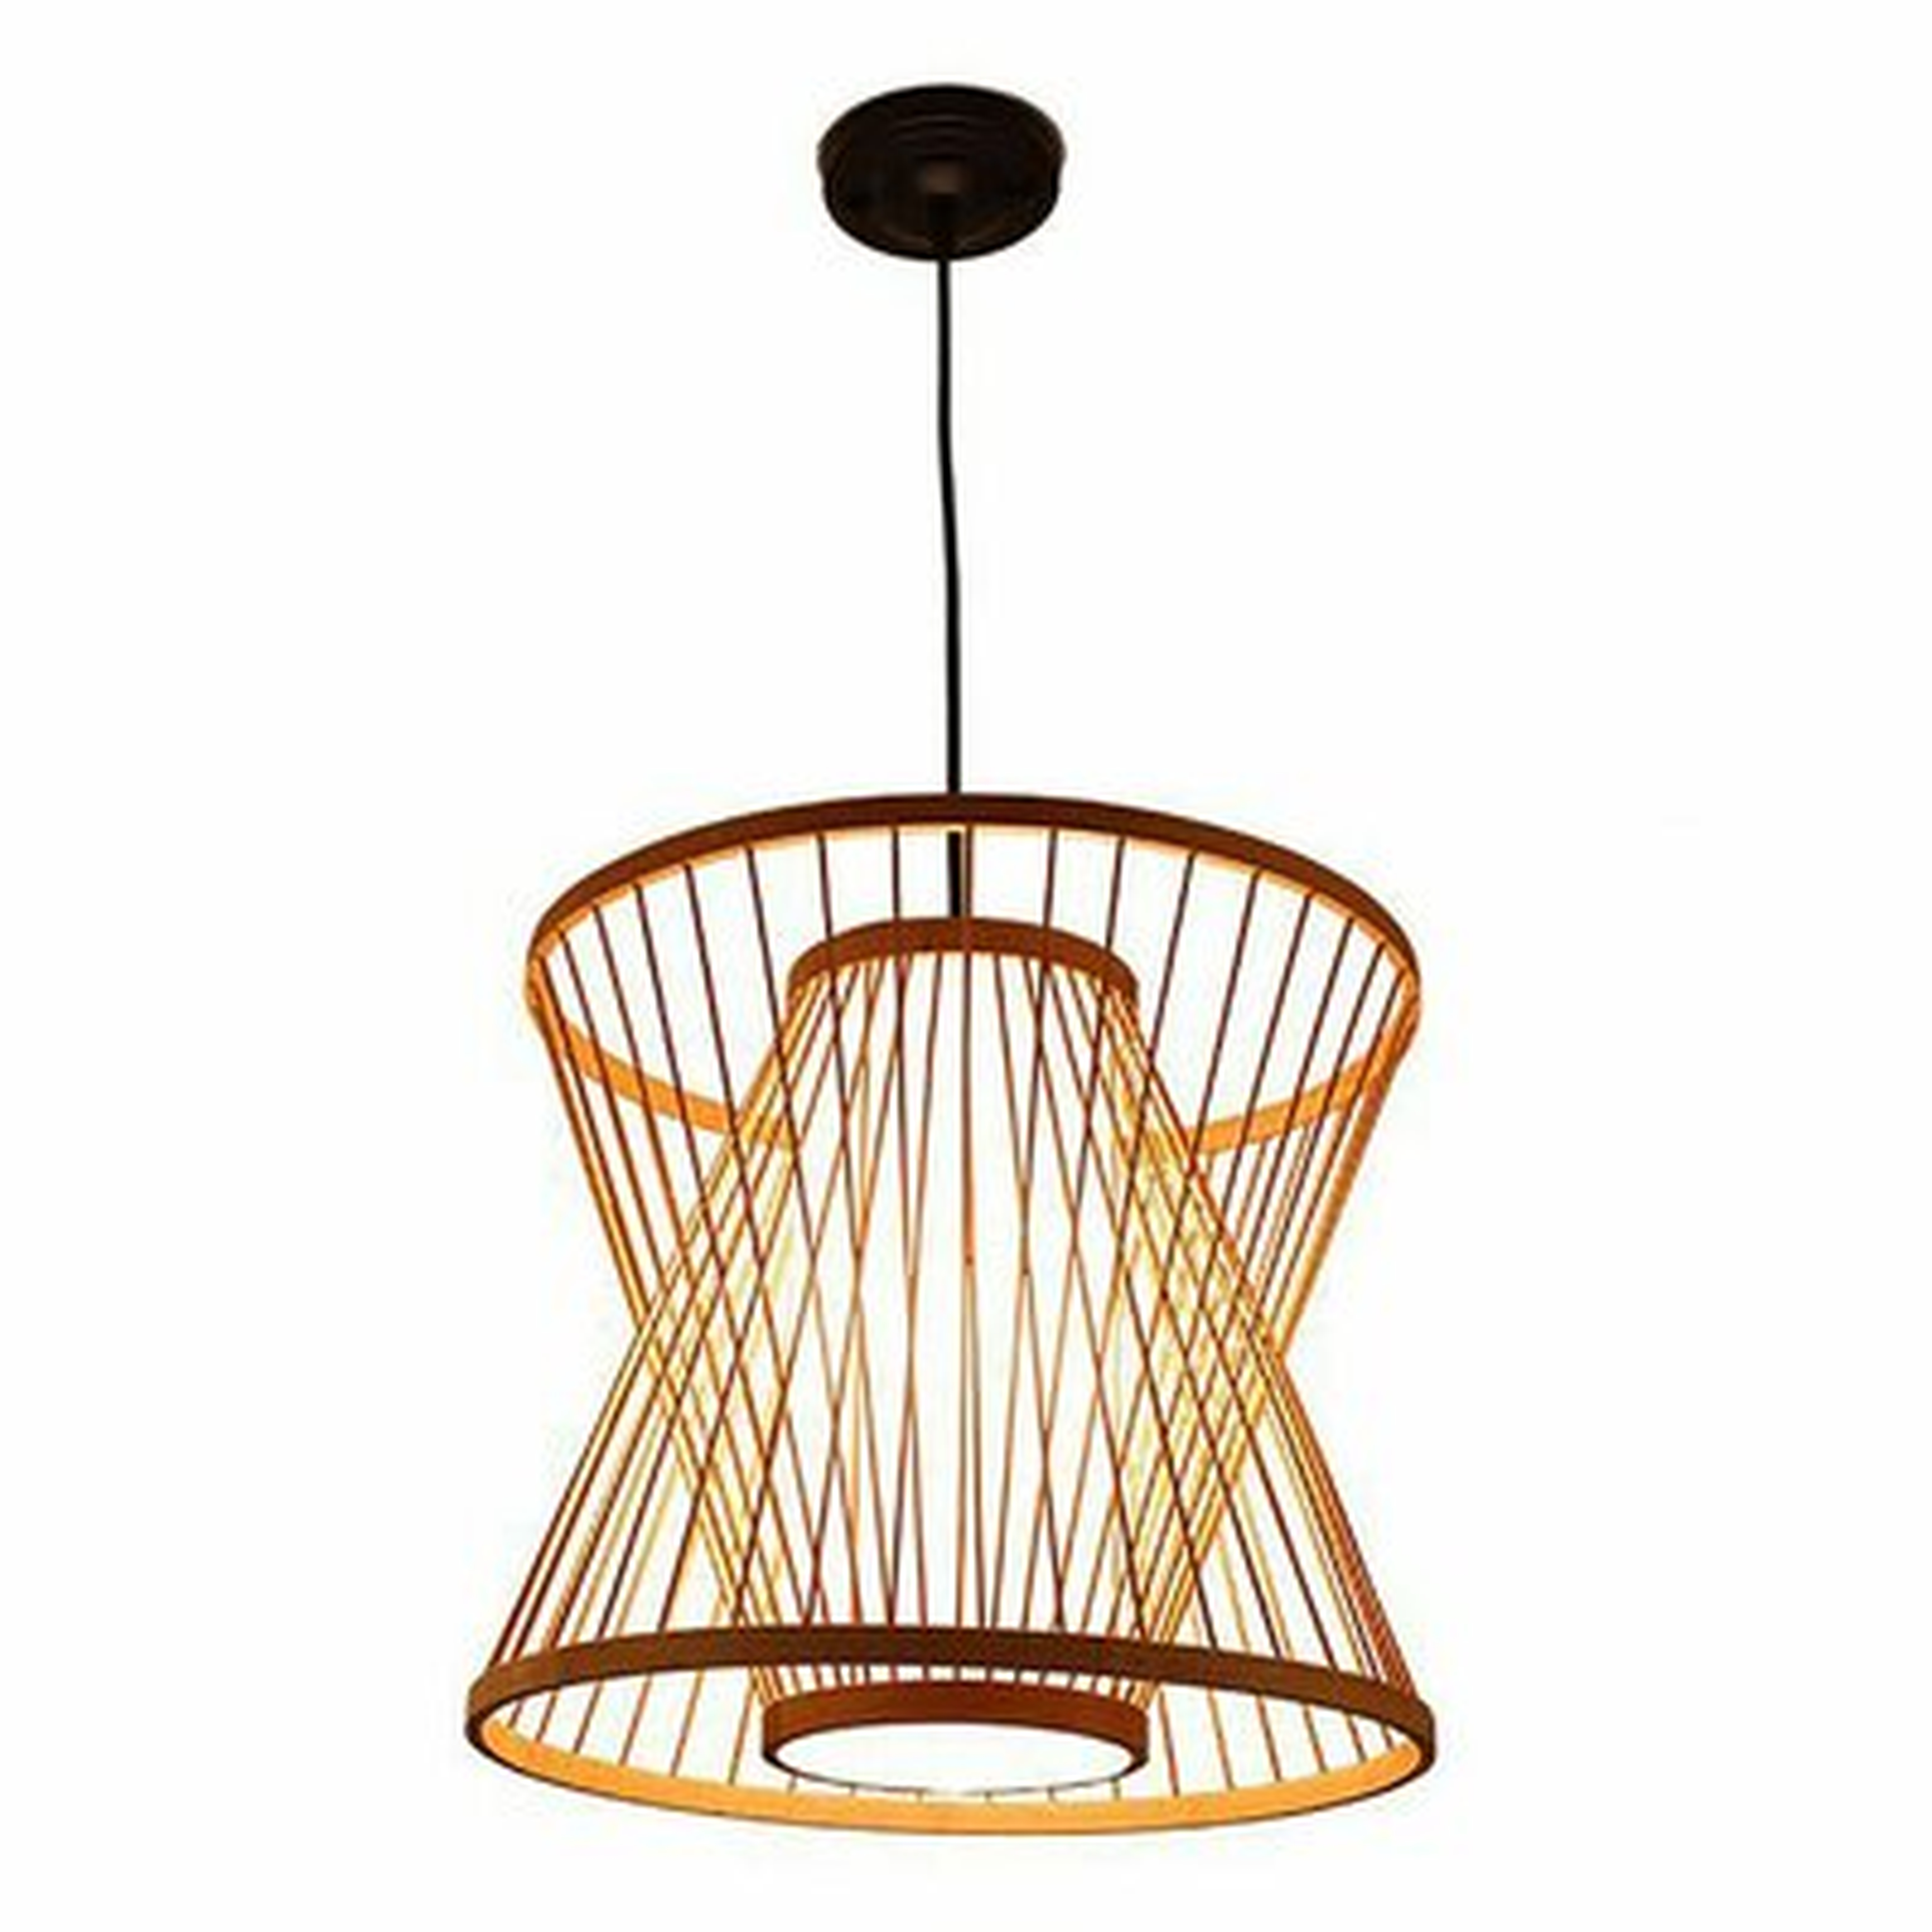 Bamboo Wicker Lamp Shade Weave Hanging Pendant Ceiling Light Rattan Light 13.79 In. - Wayfair